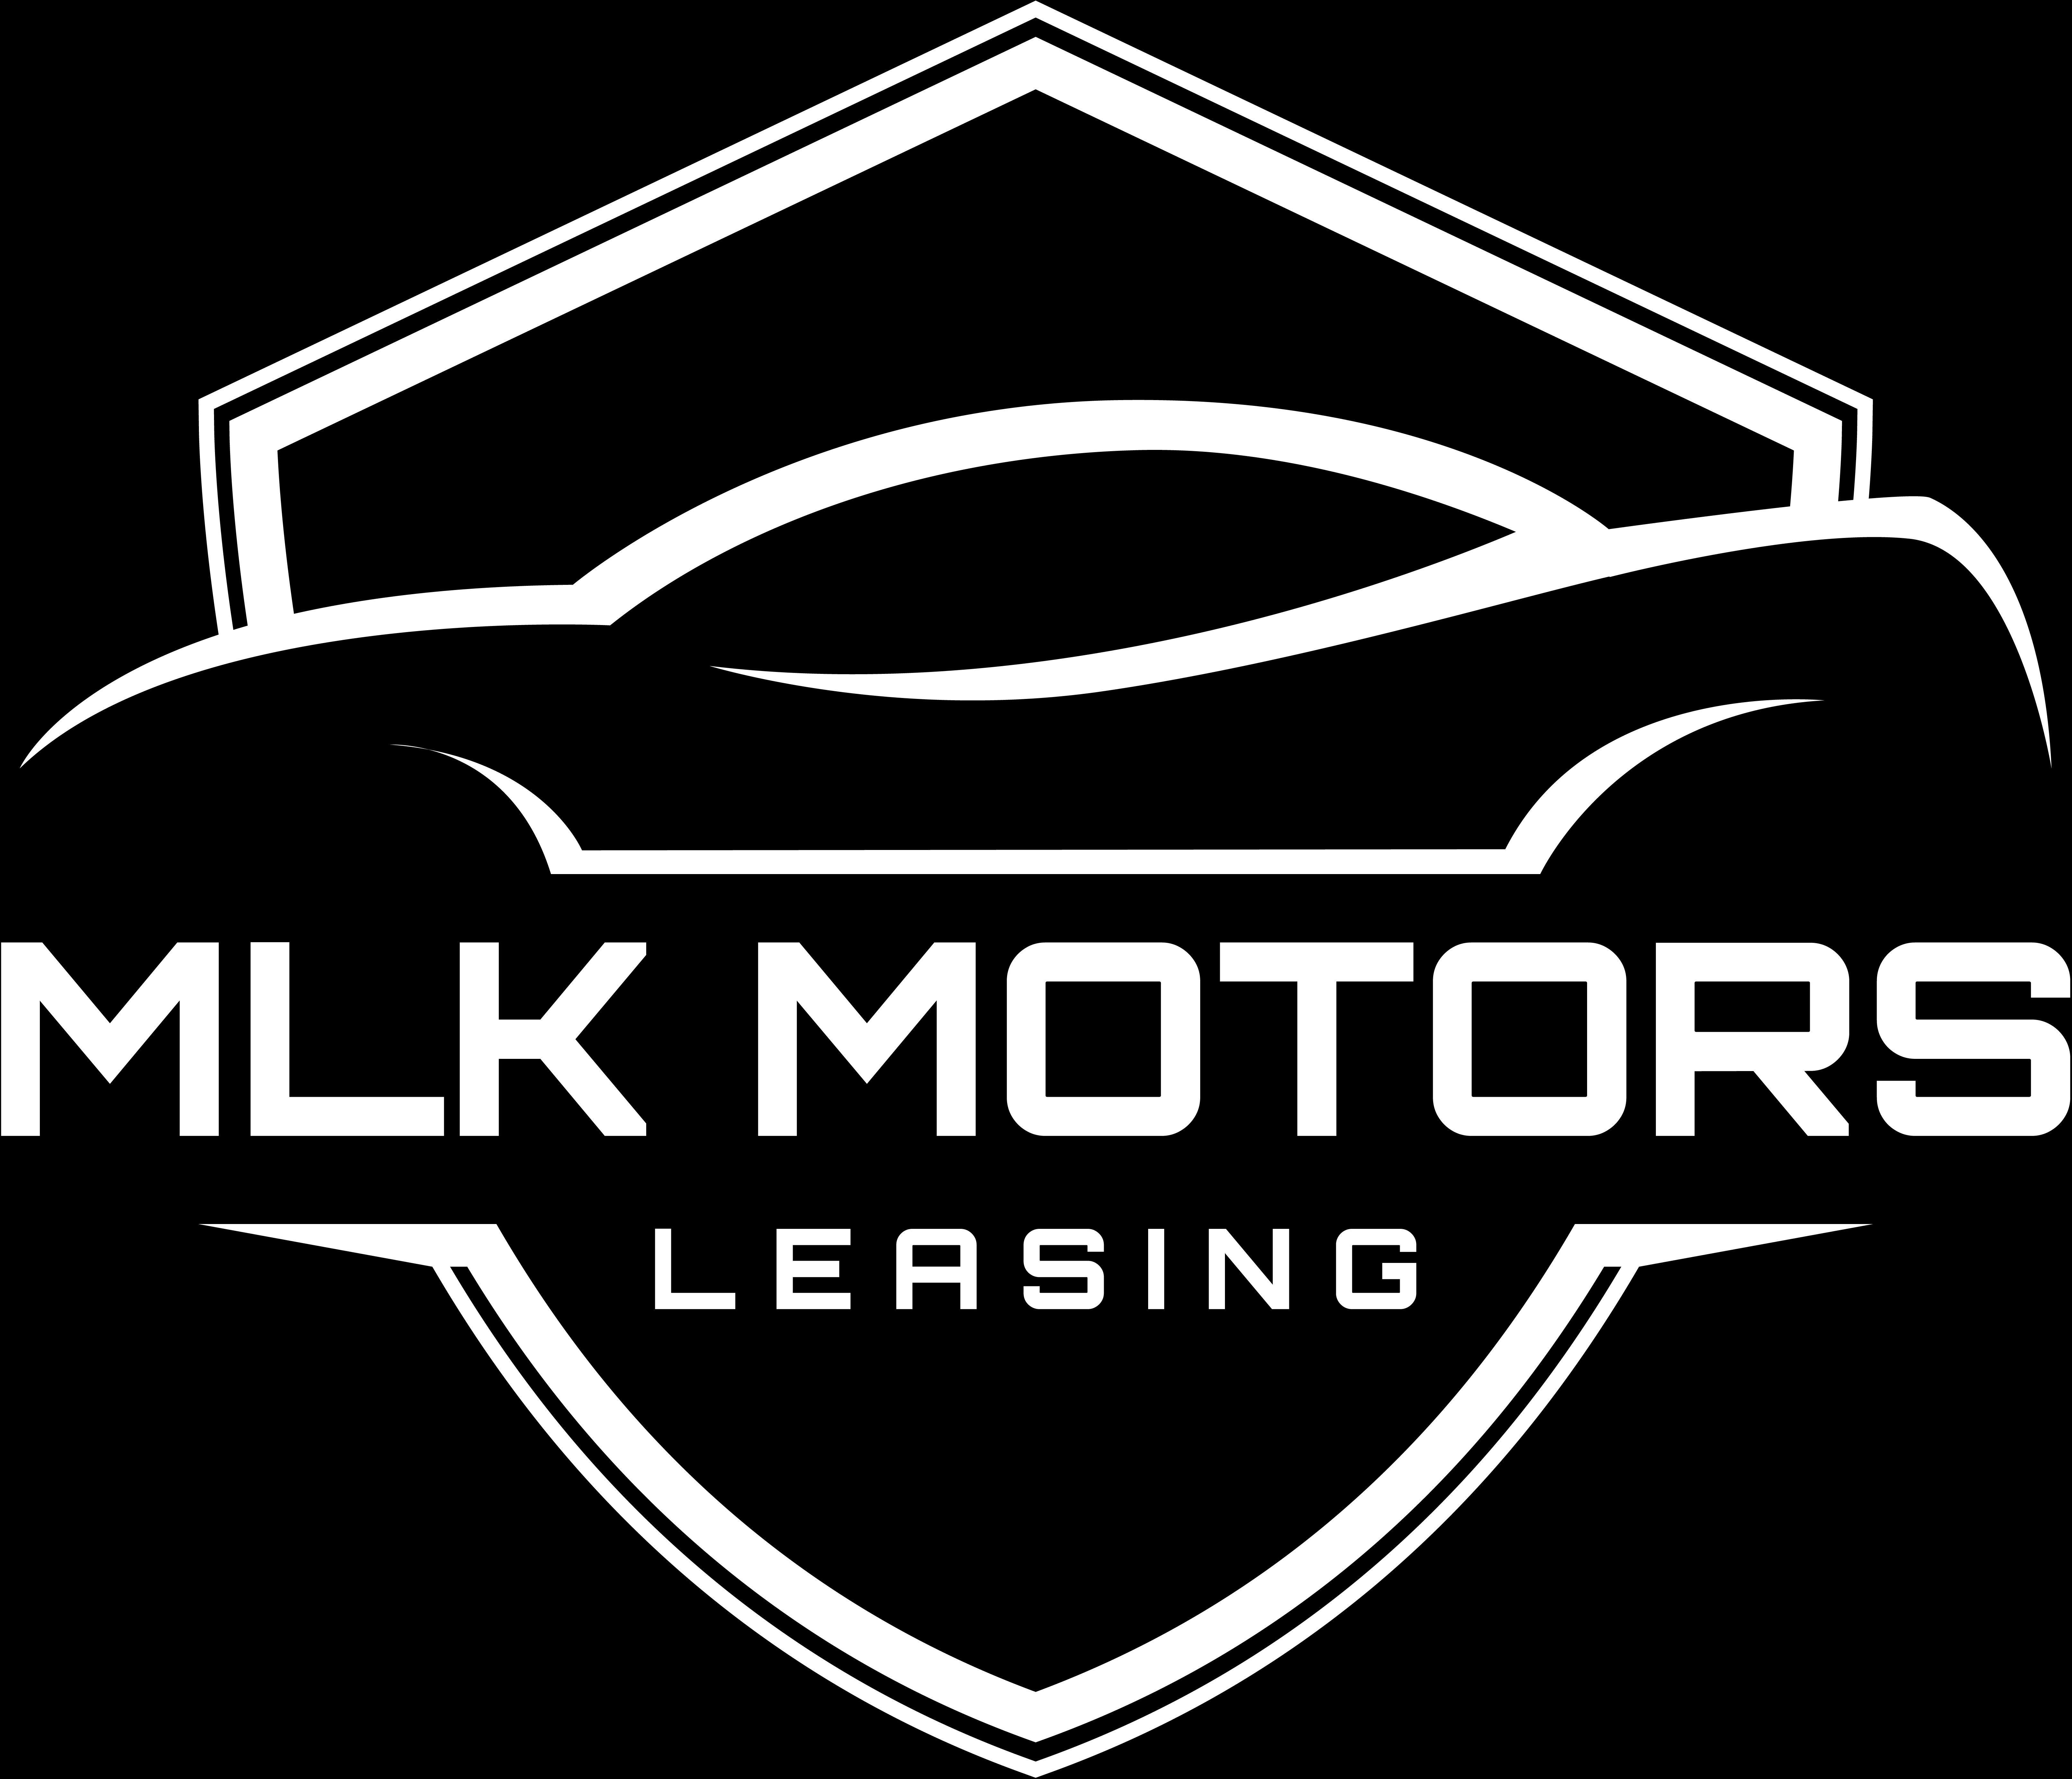 MLK Motors